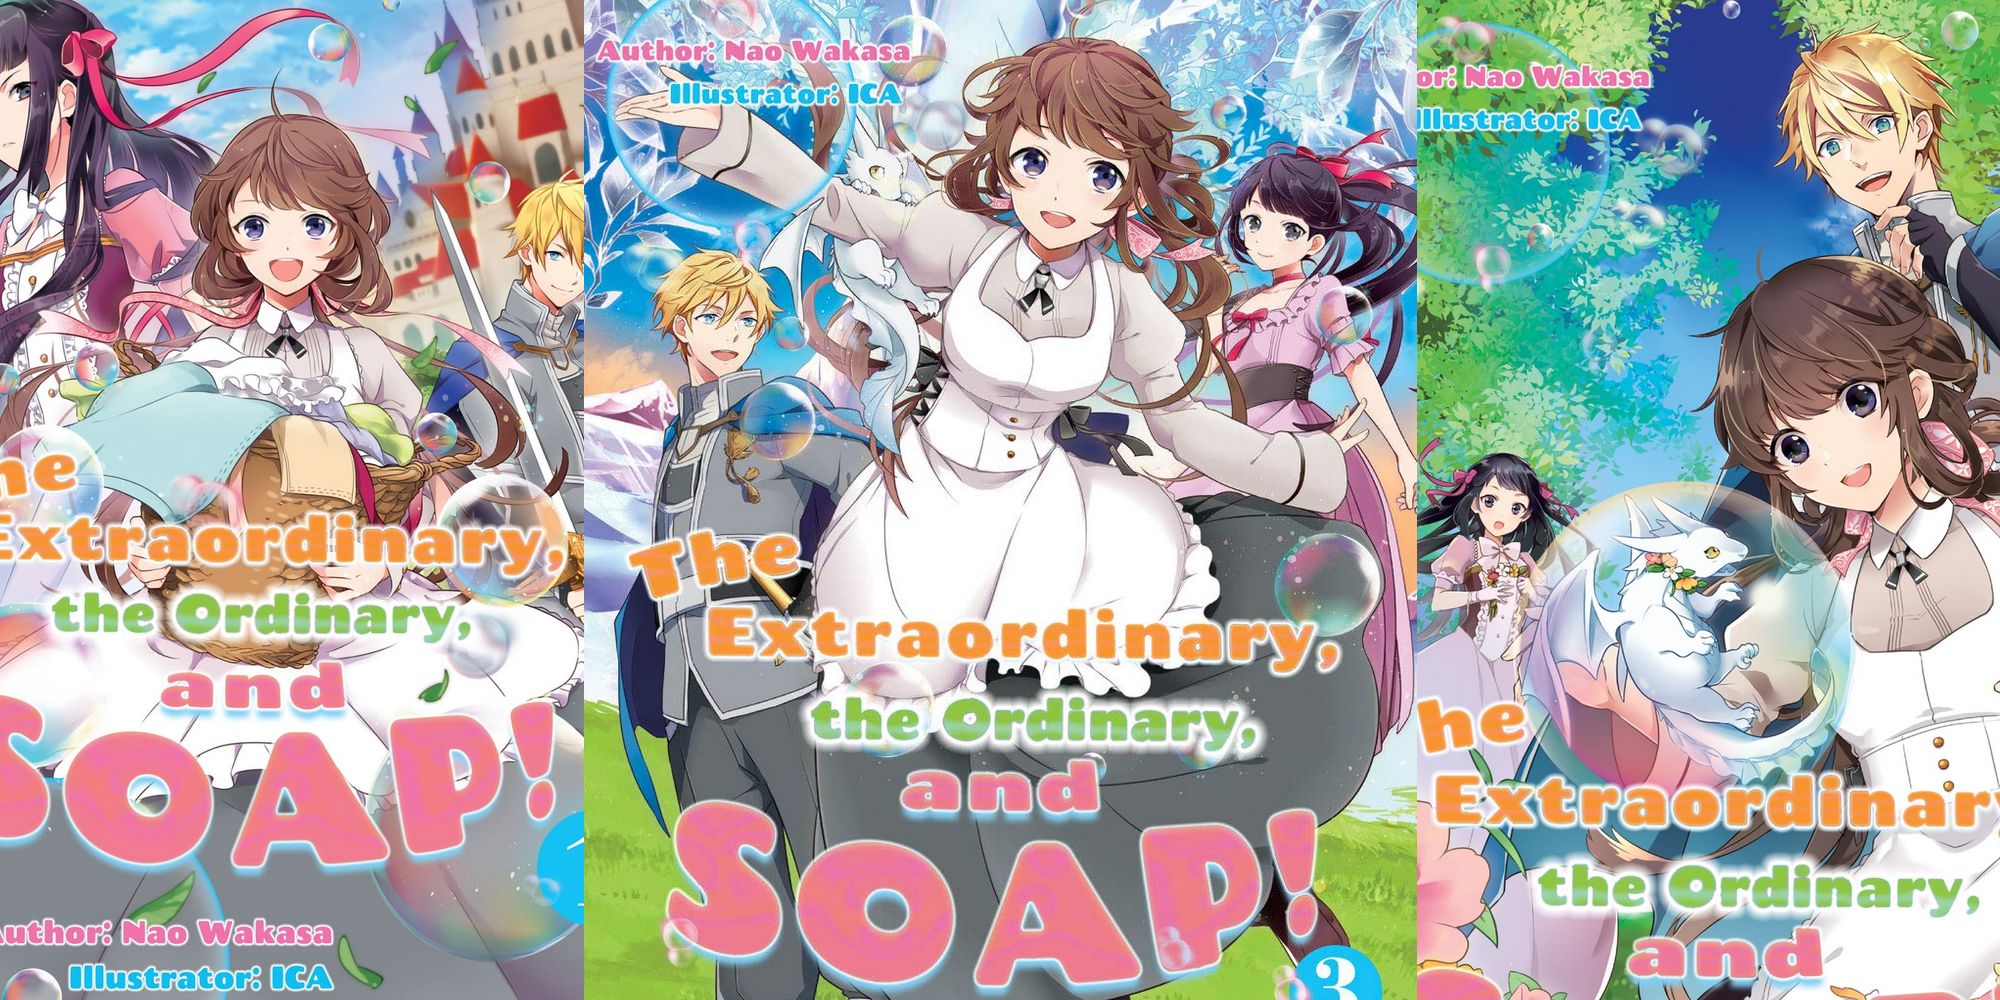 The Extraordinary, The Ordinary, And SOAP!